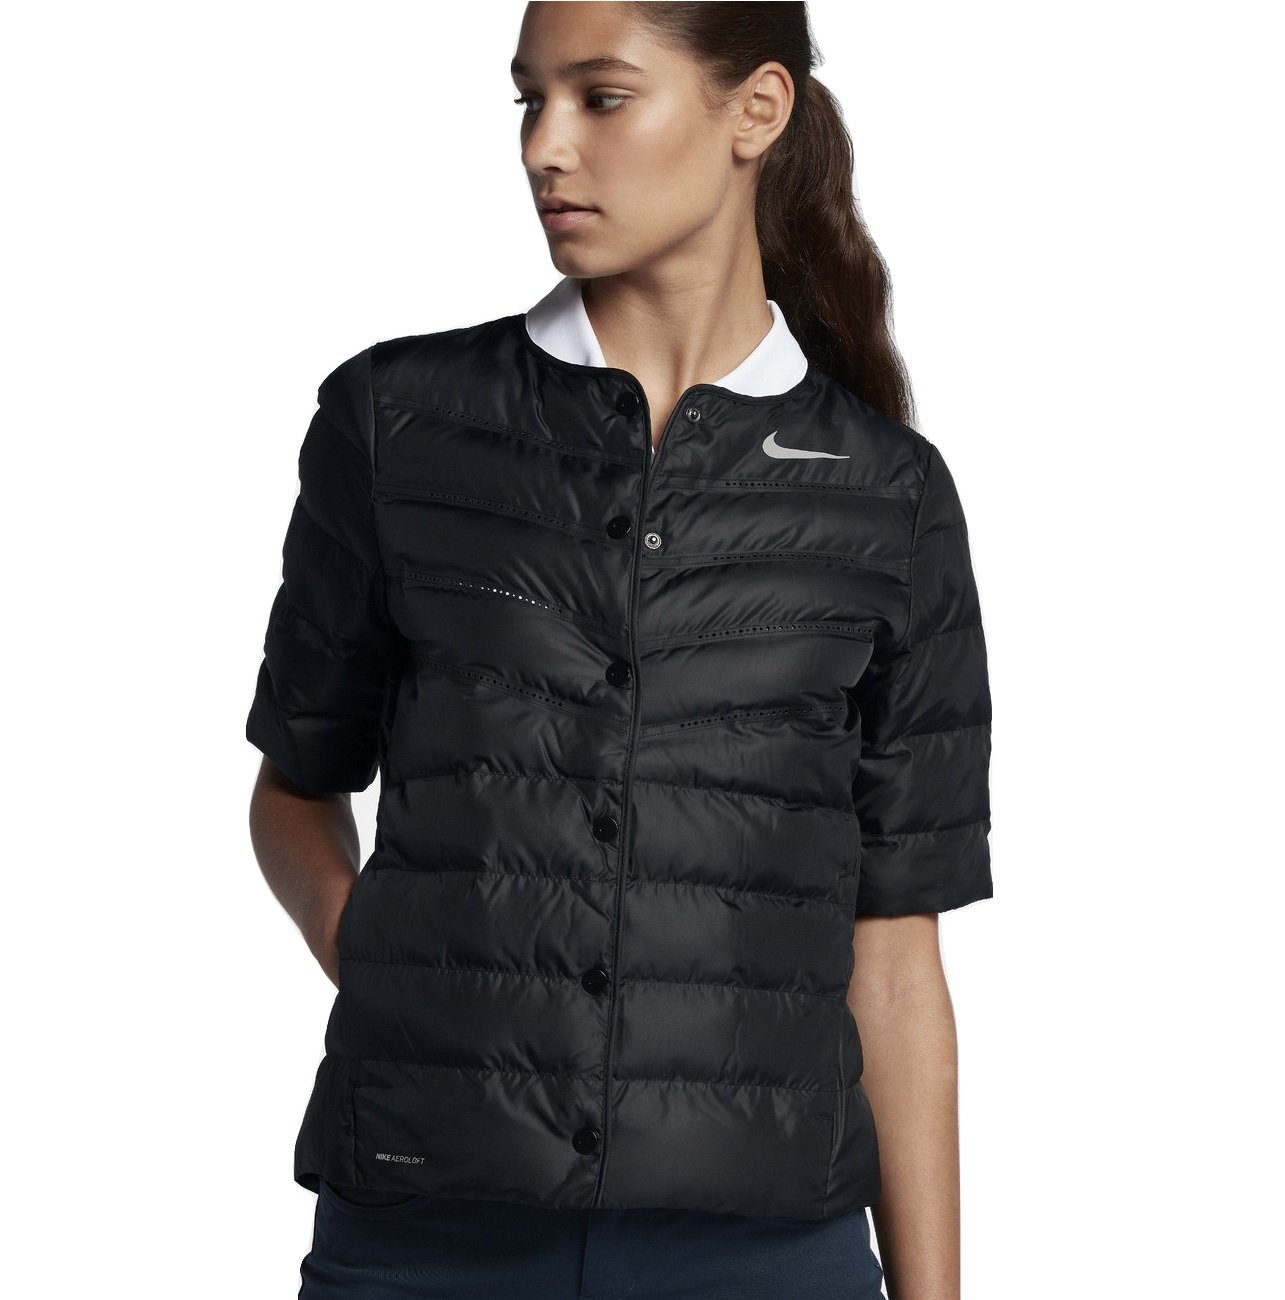 Womens Nike Aeroloft Half Sleeve Golf Jackets